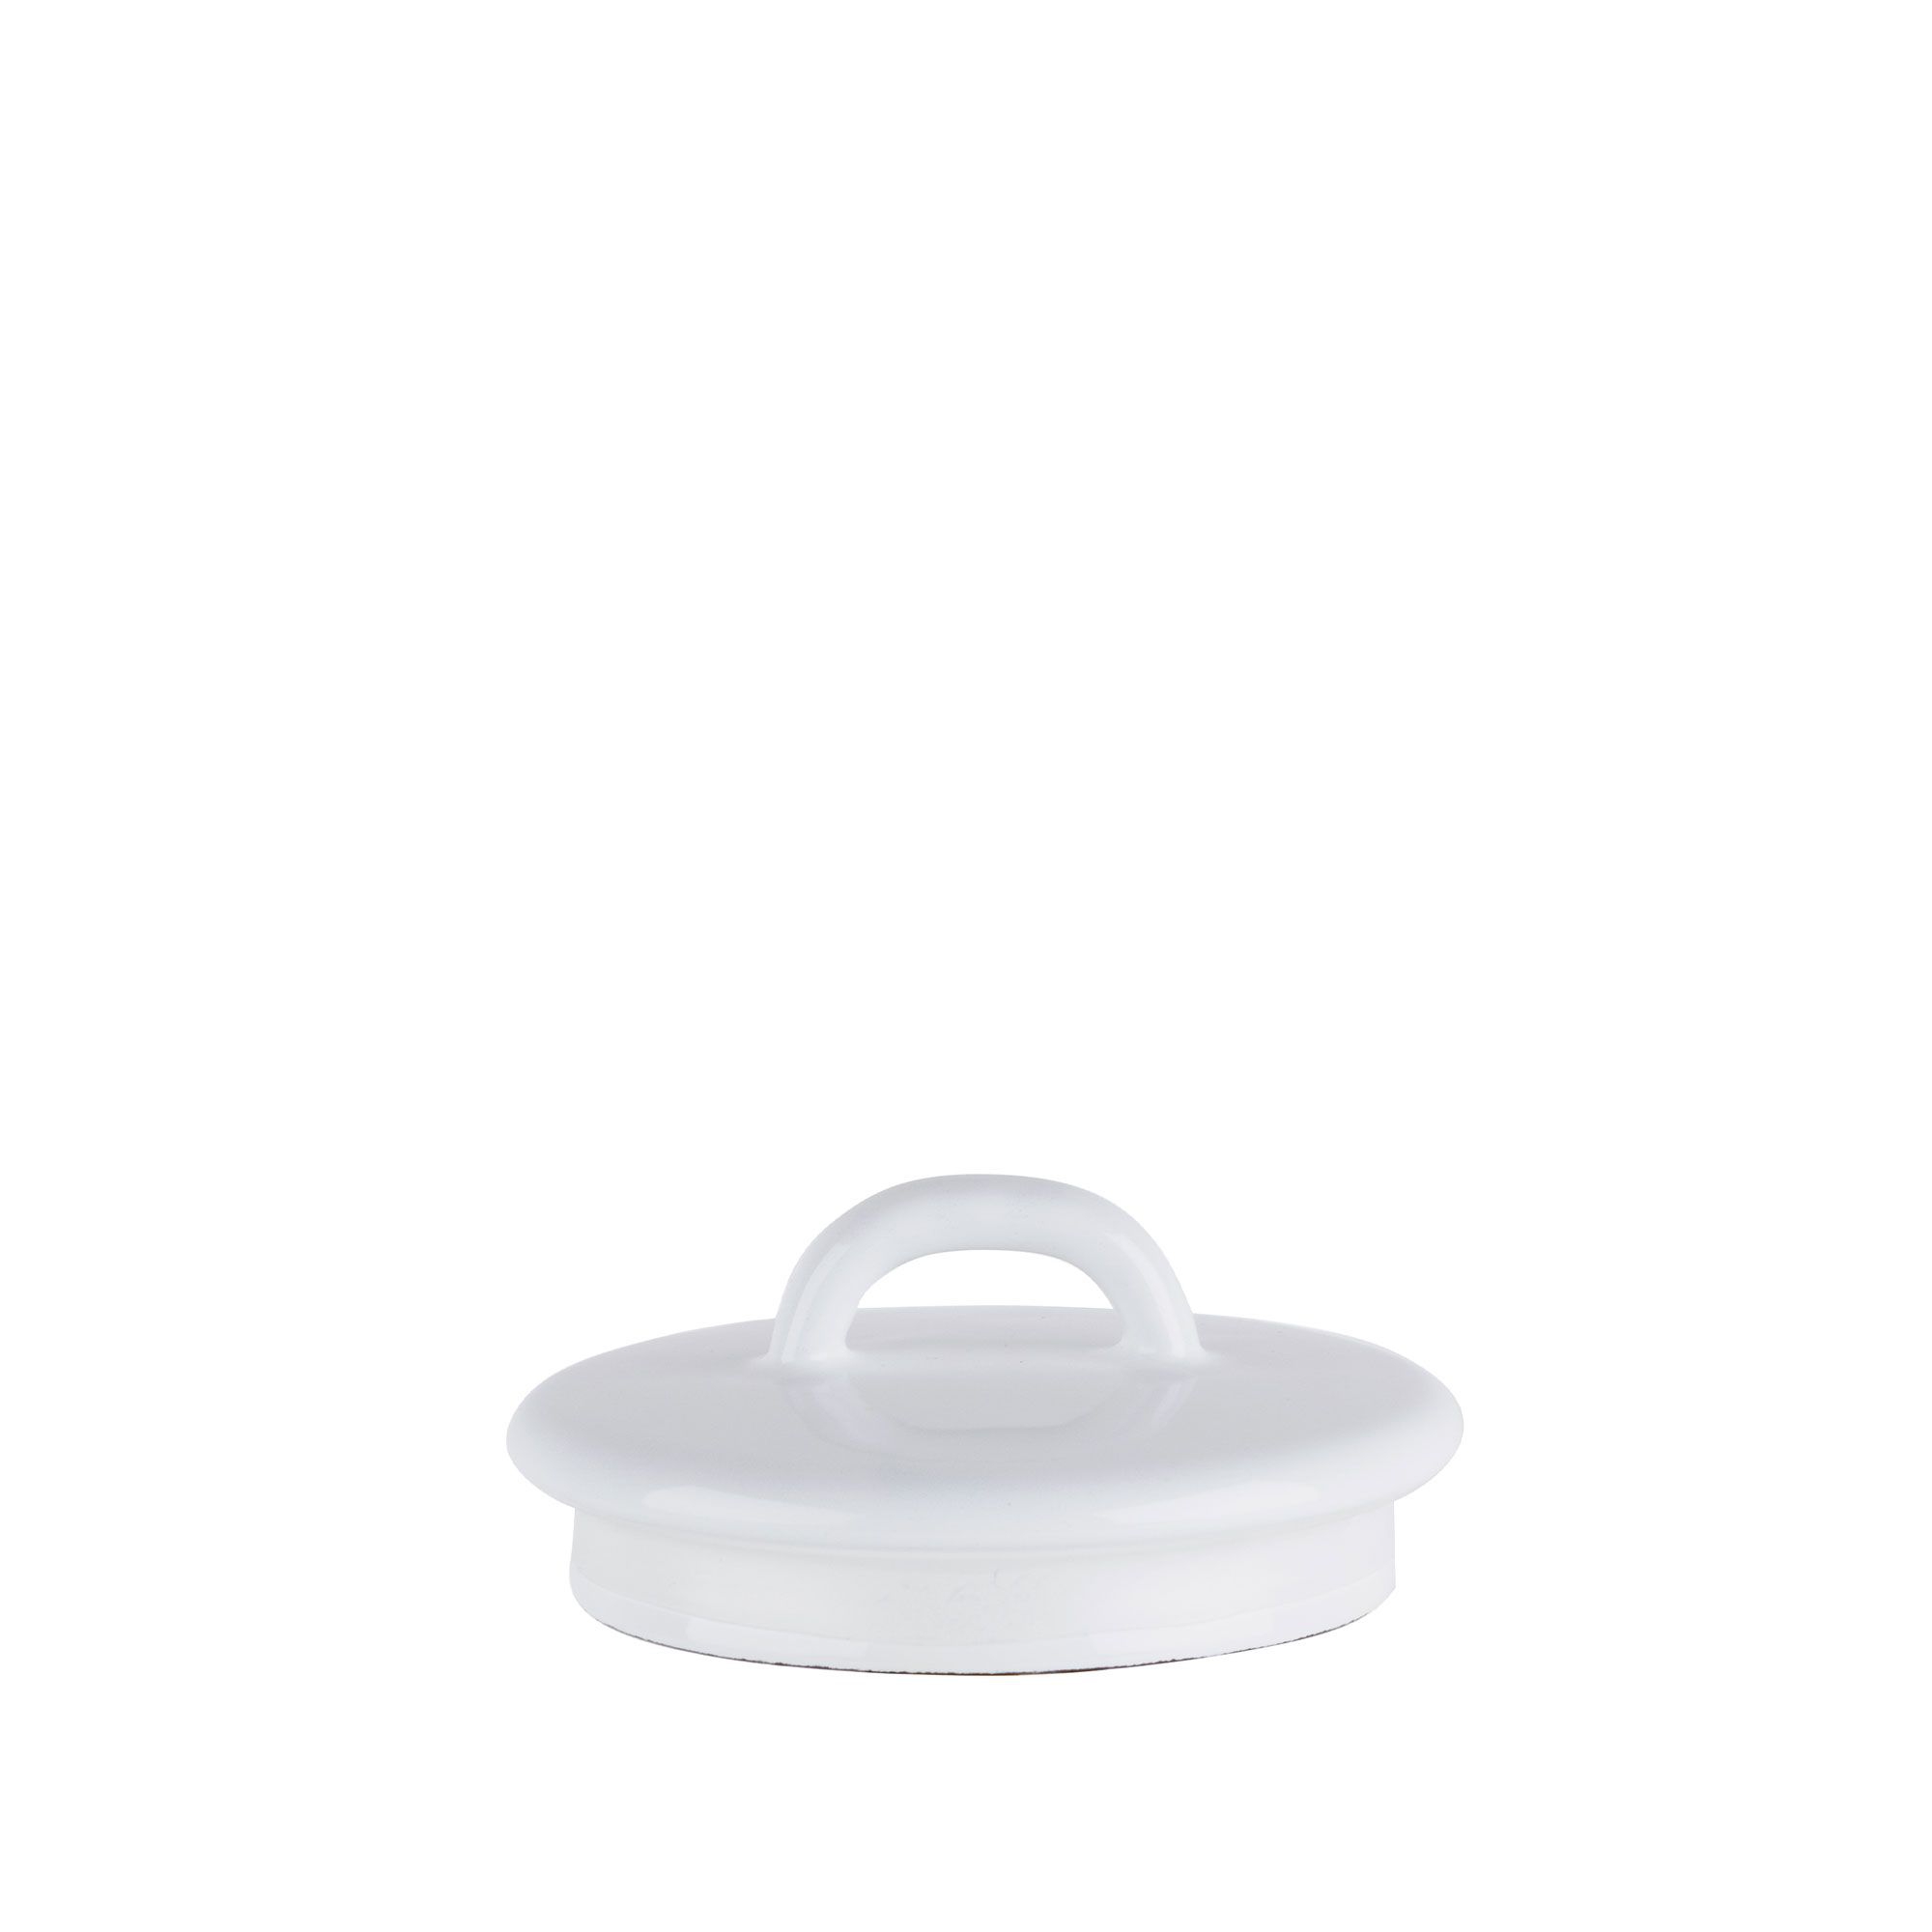 Riess CLASSIC - White - Enamel lid for milk jug